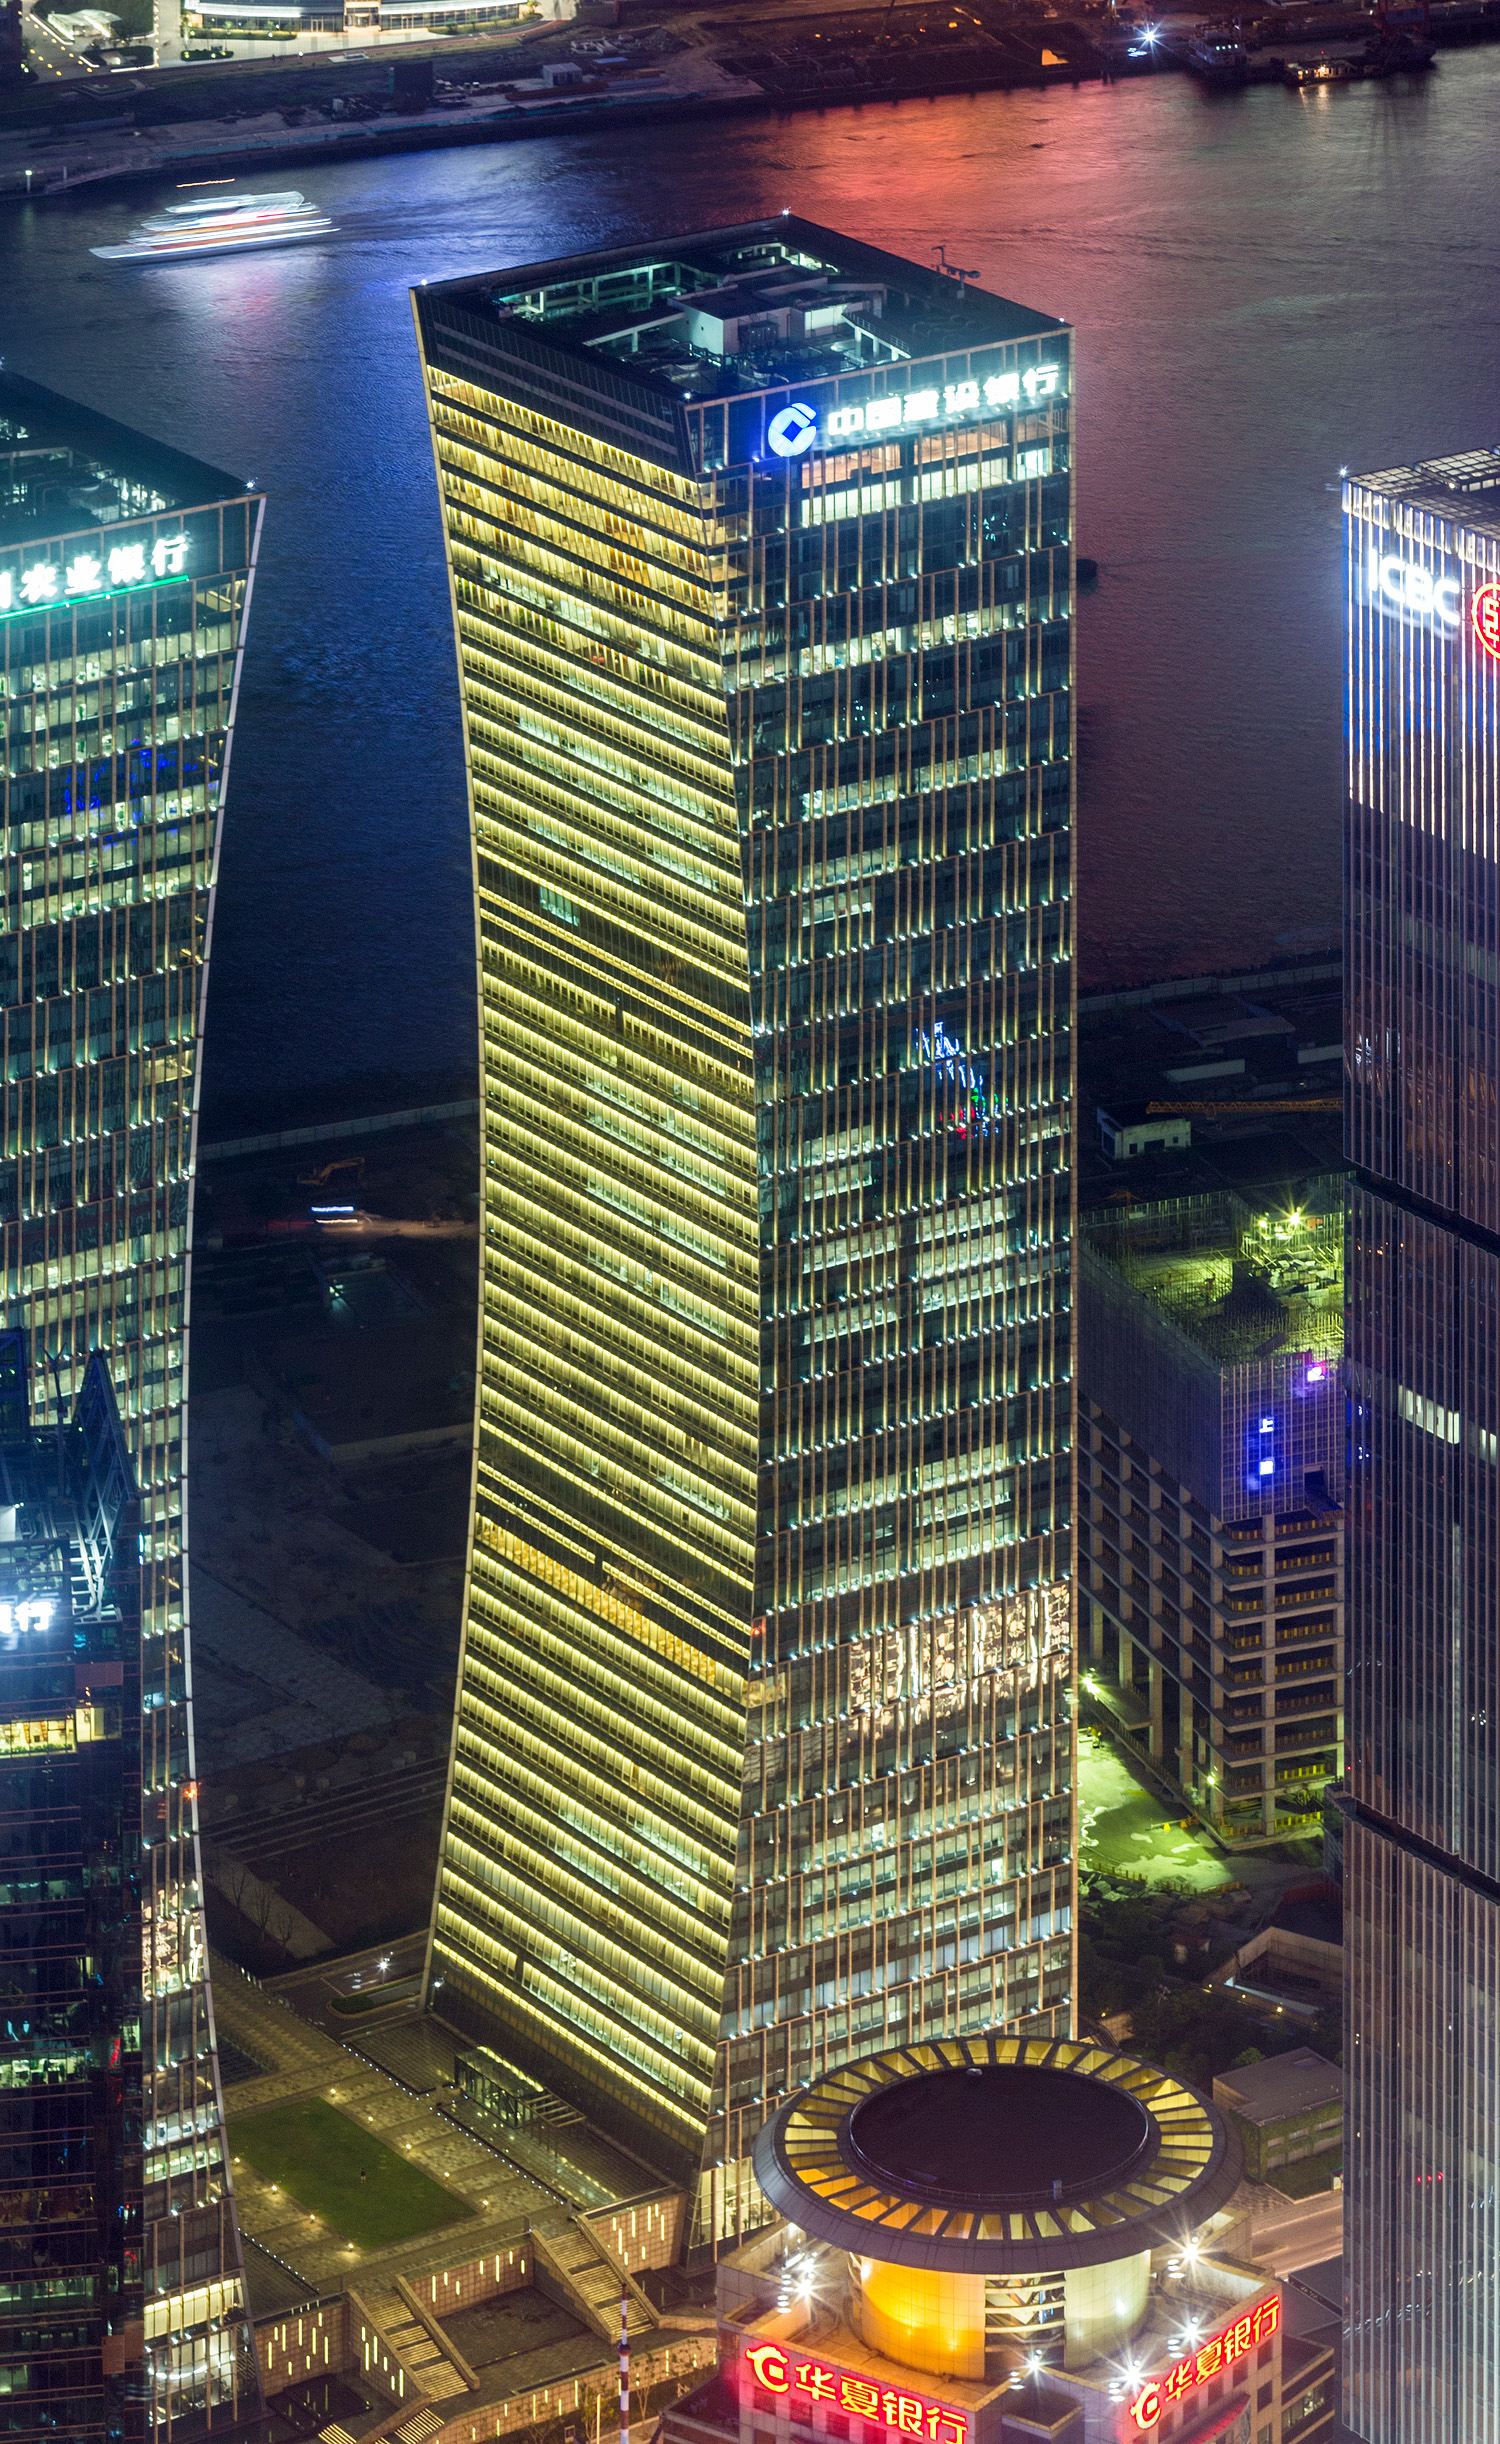 Riviera TwinStar Square 2, Shanghai - View from Shanghai Tower. © Mathias Beinling